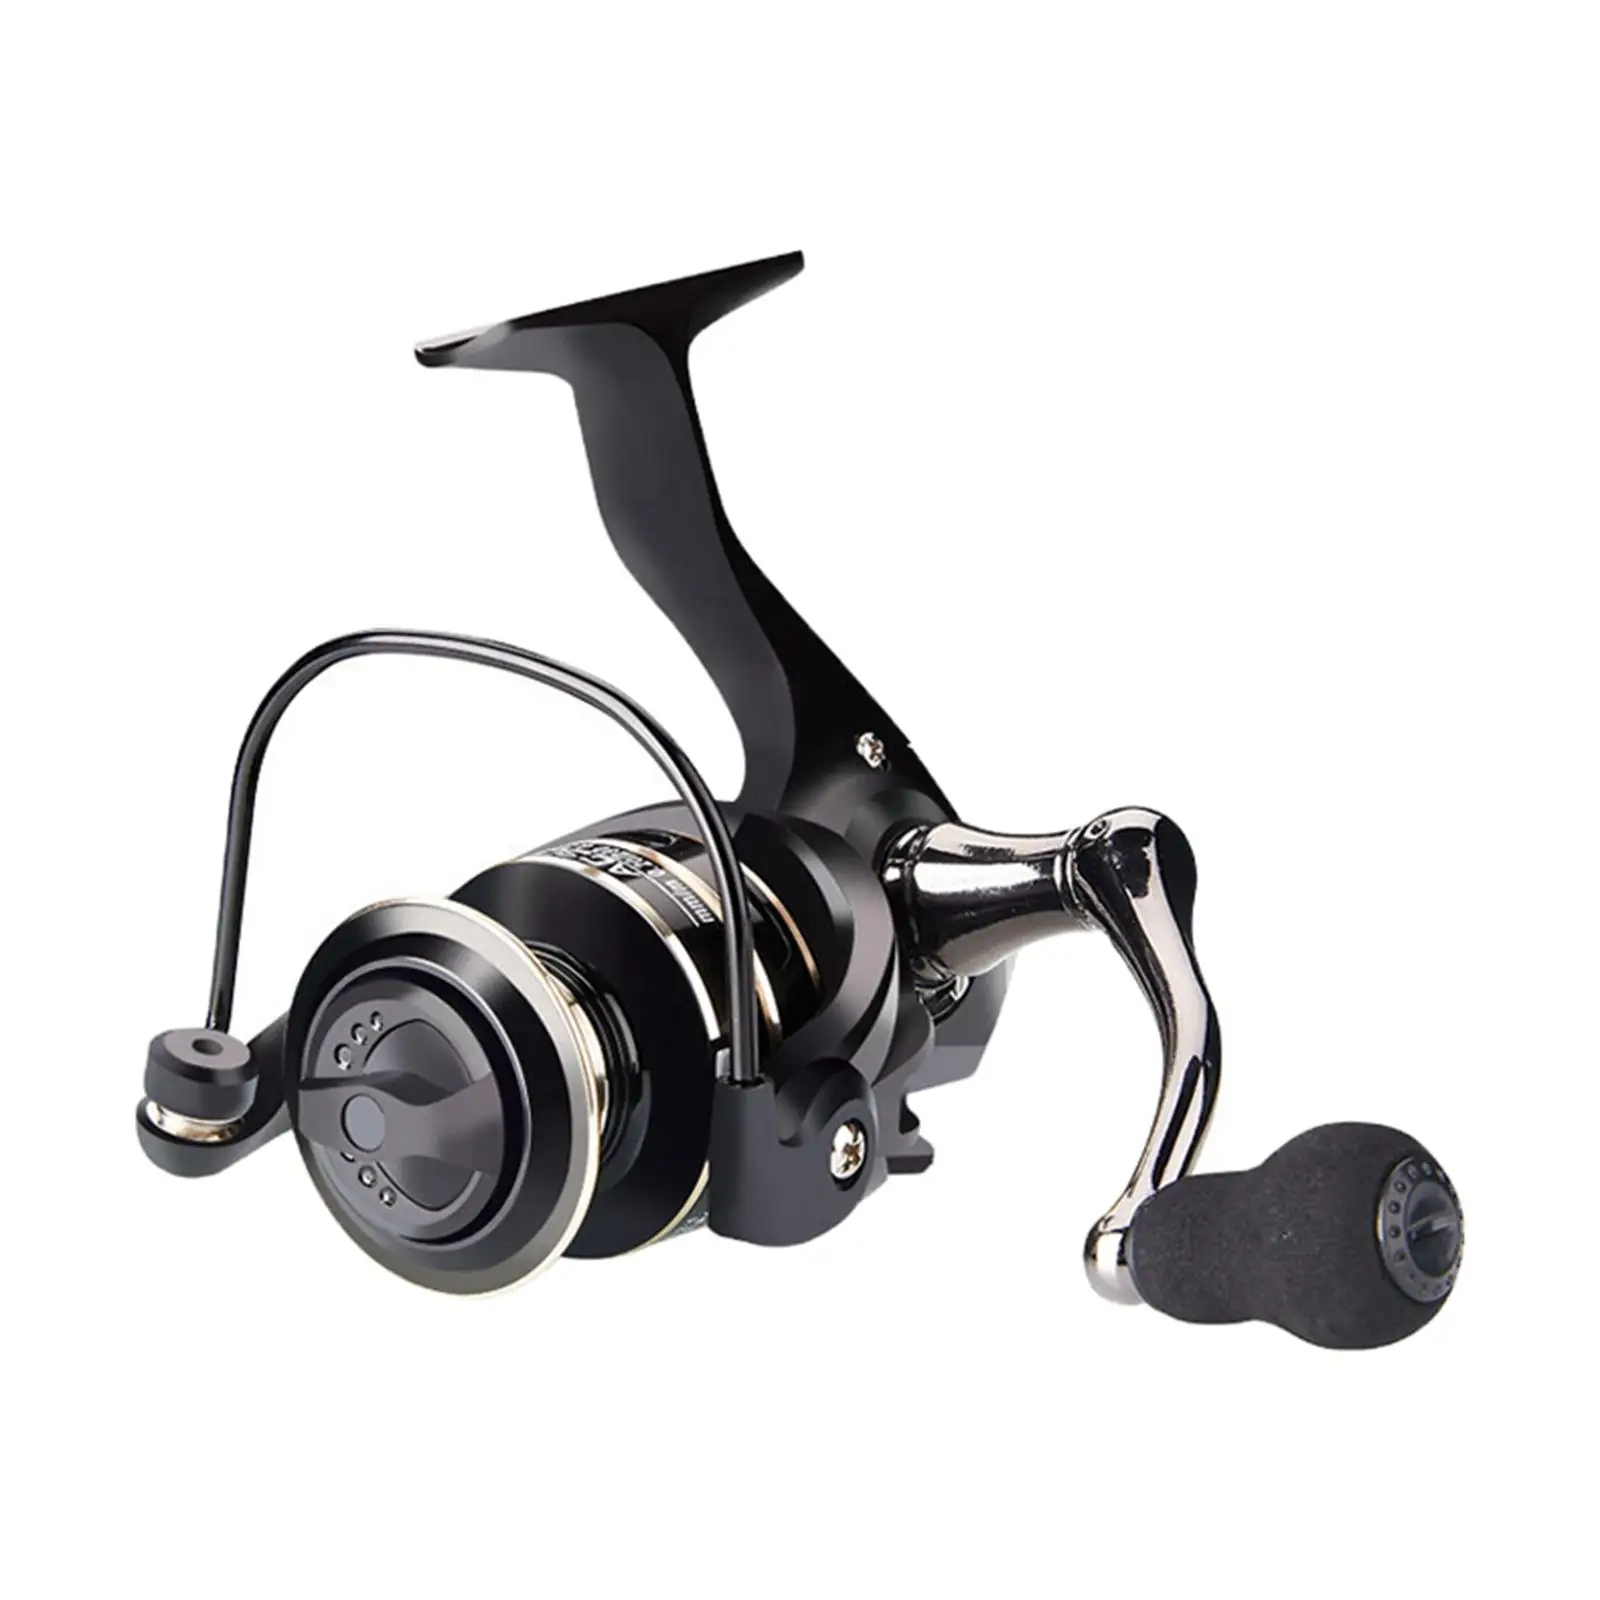 Fishing Reel 5.2:1 Gear Ratio Salmon Powerful Metal Line Cup High Speed Freshwater Sturdy Light Weight Fishing Wheel